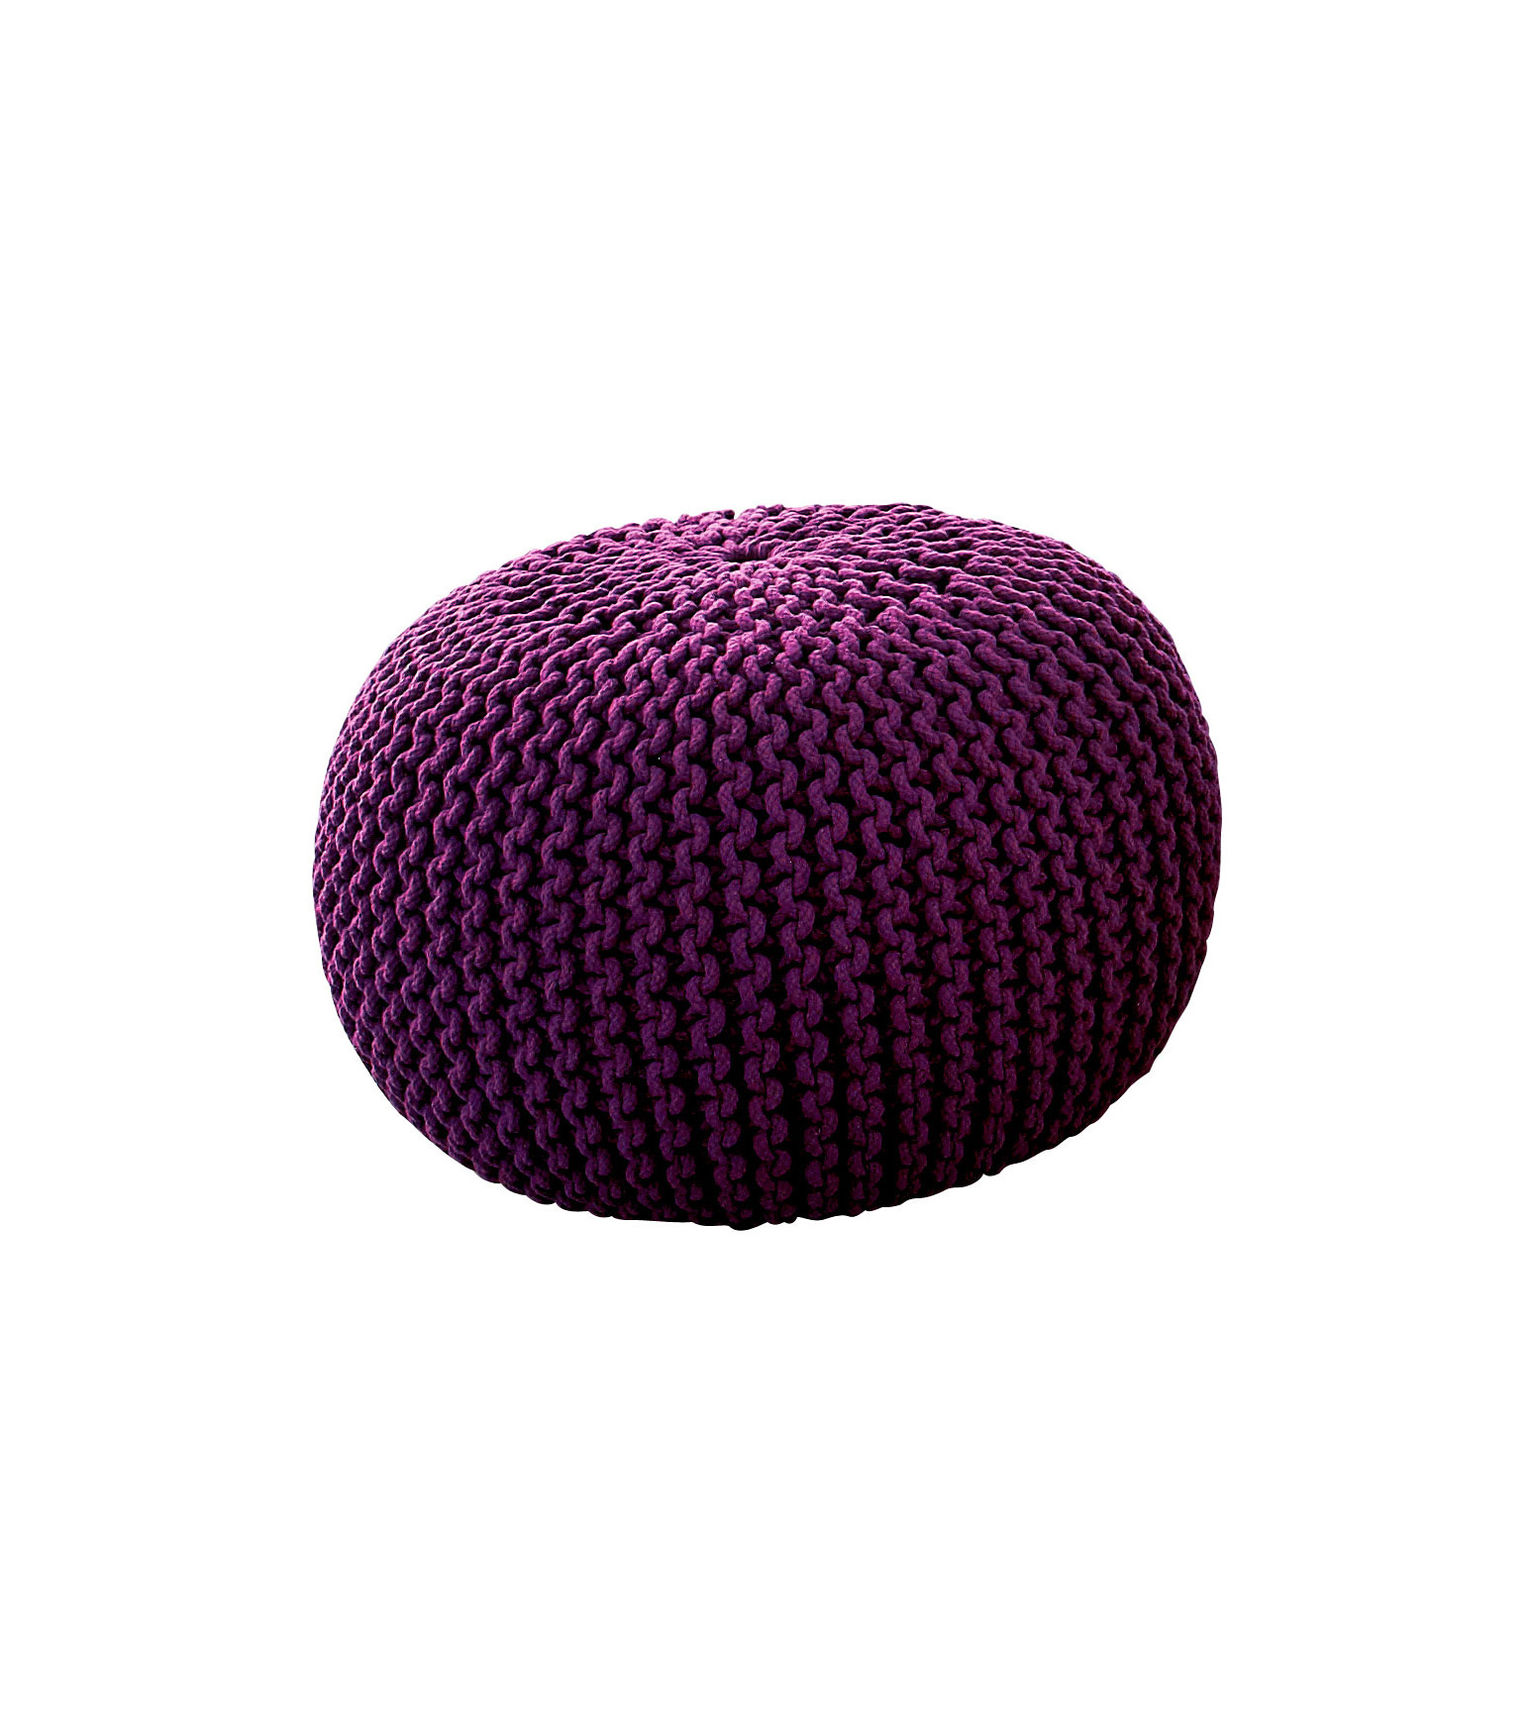 Sitzkissen Knitting, Farbe: lila jetzt bei Weltbild.de bestellen